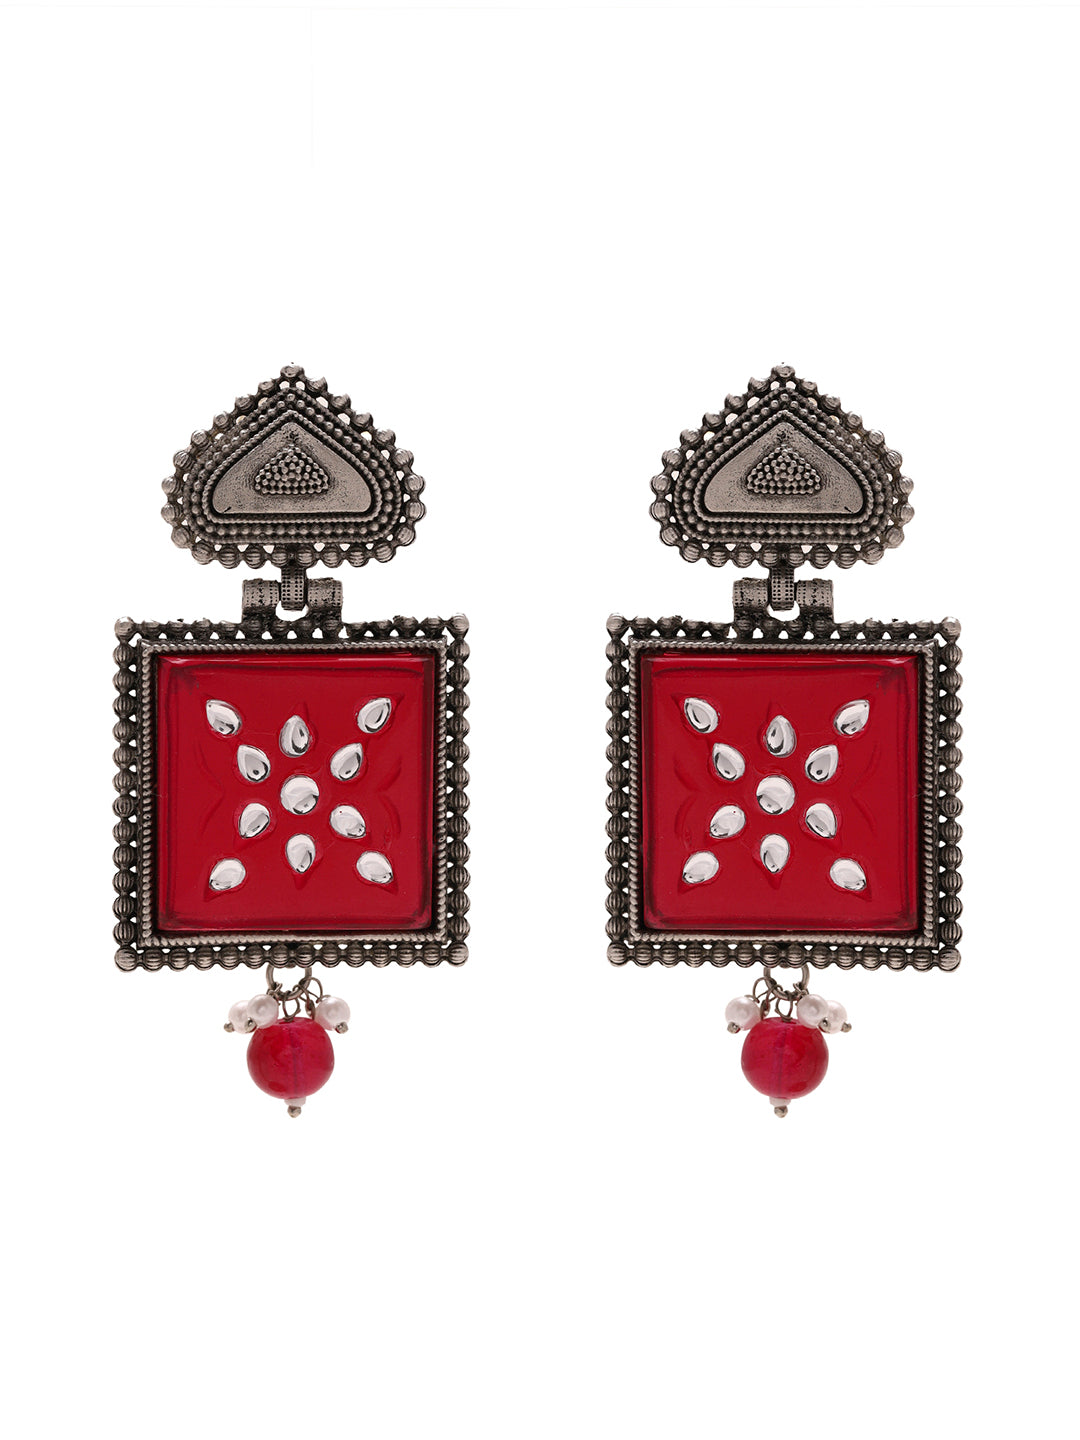 Priyaasi Oxidized Beauty in Square-Style Drop Earrings